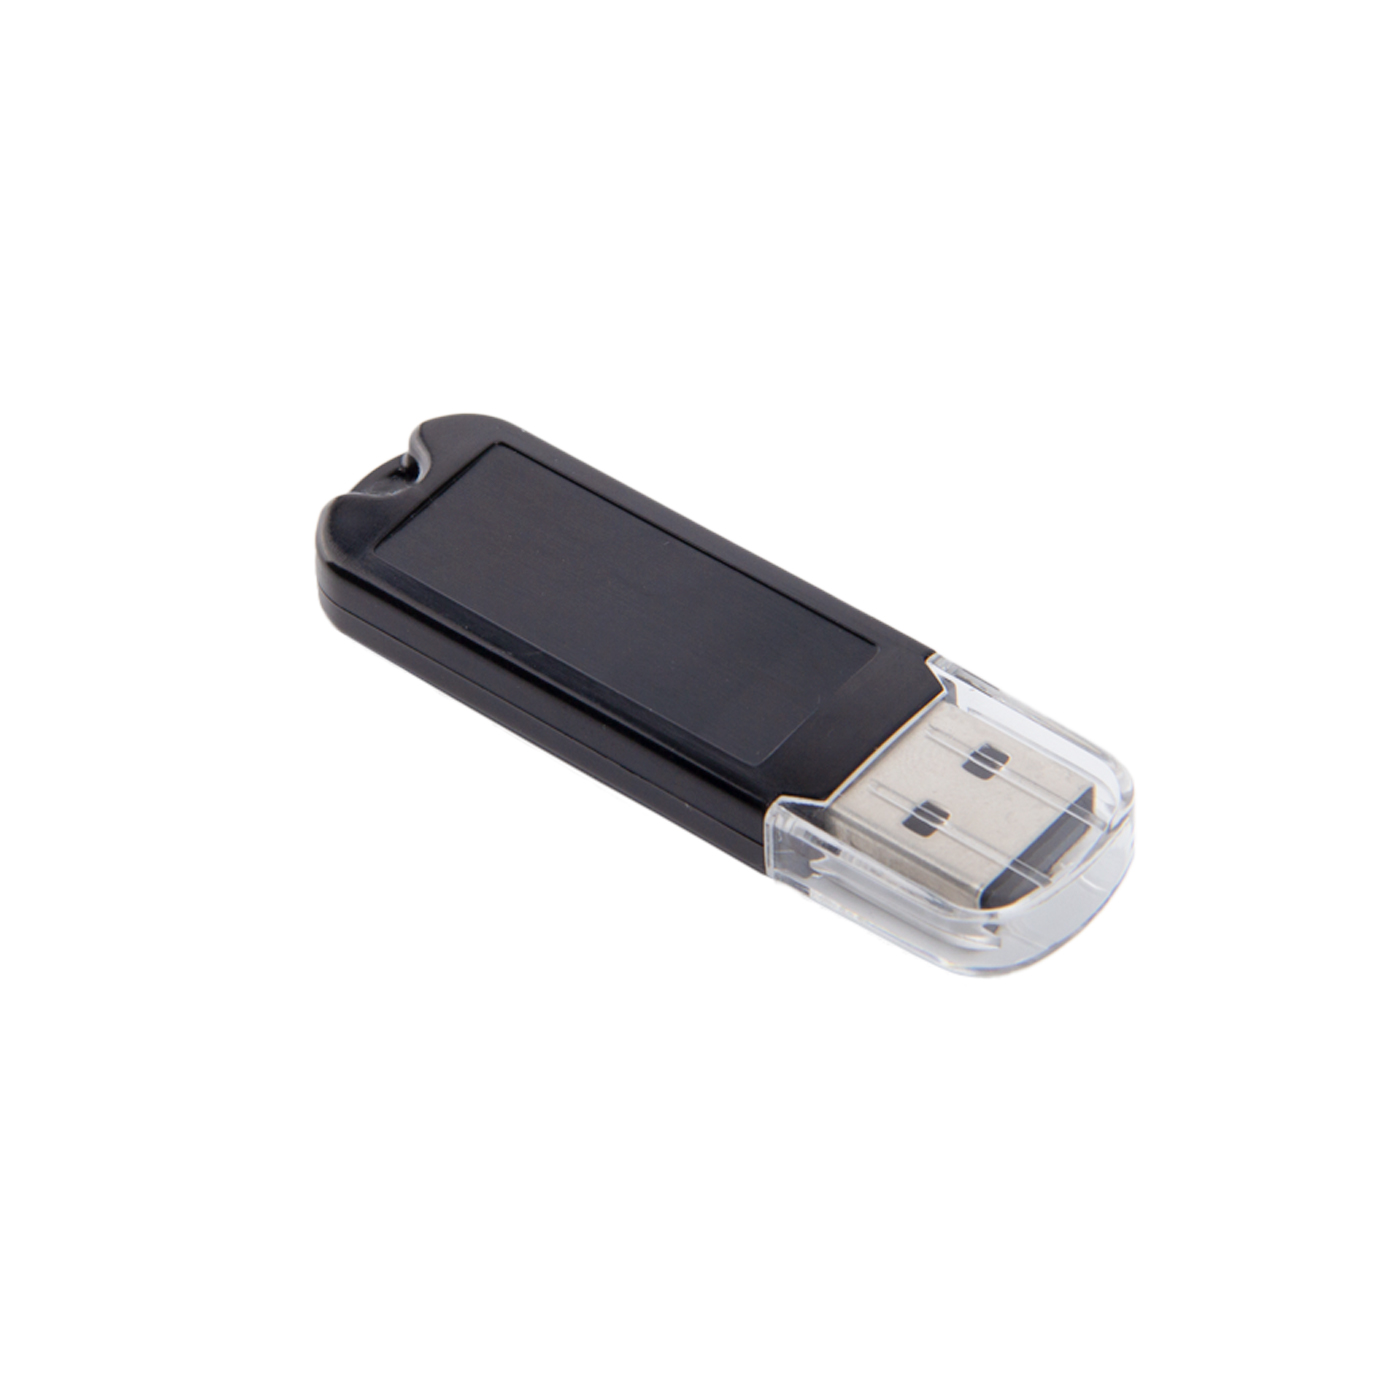 2GB USB Flash Drive With Keyring Hole2